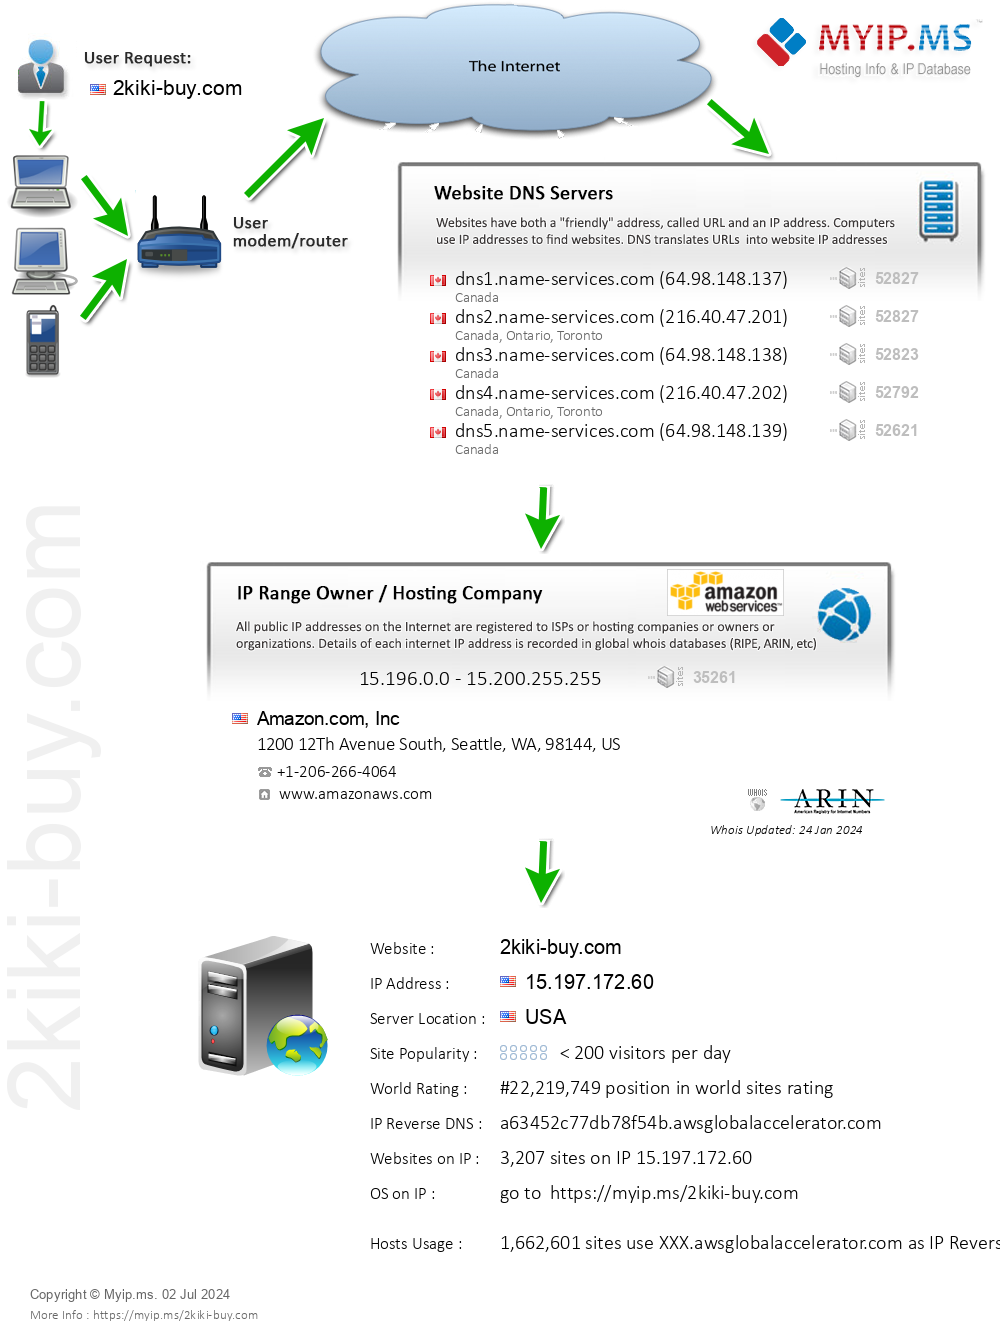 2kiki-buy.com - Website Hosting Visual IP Diagram